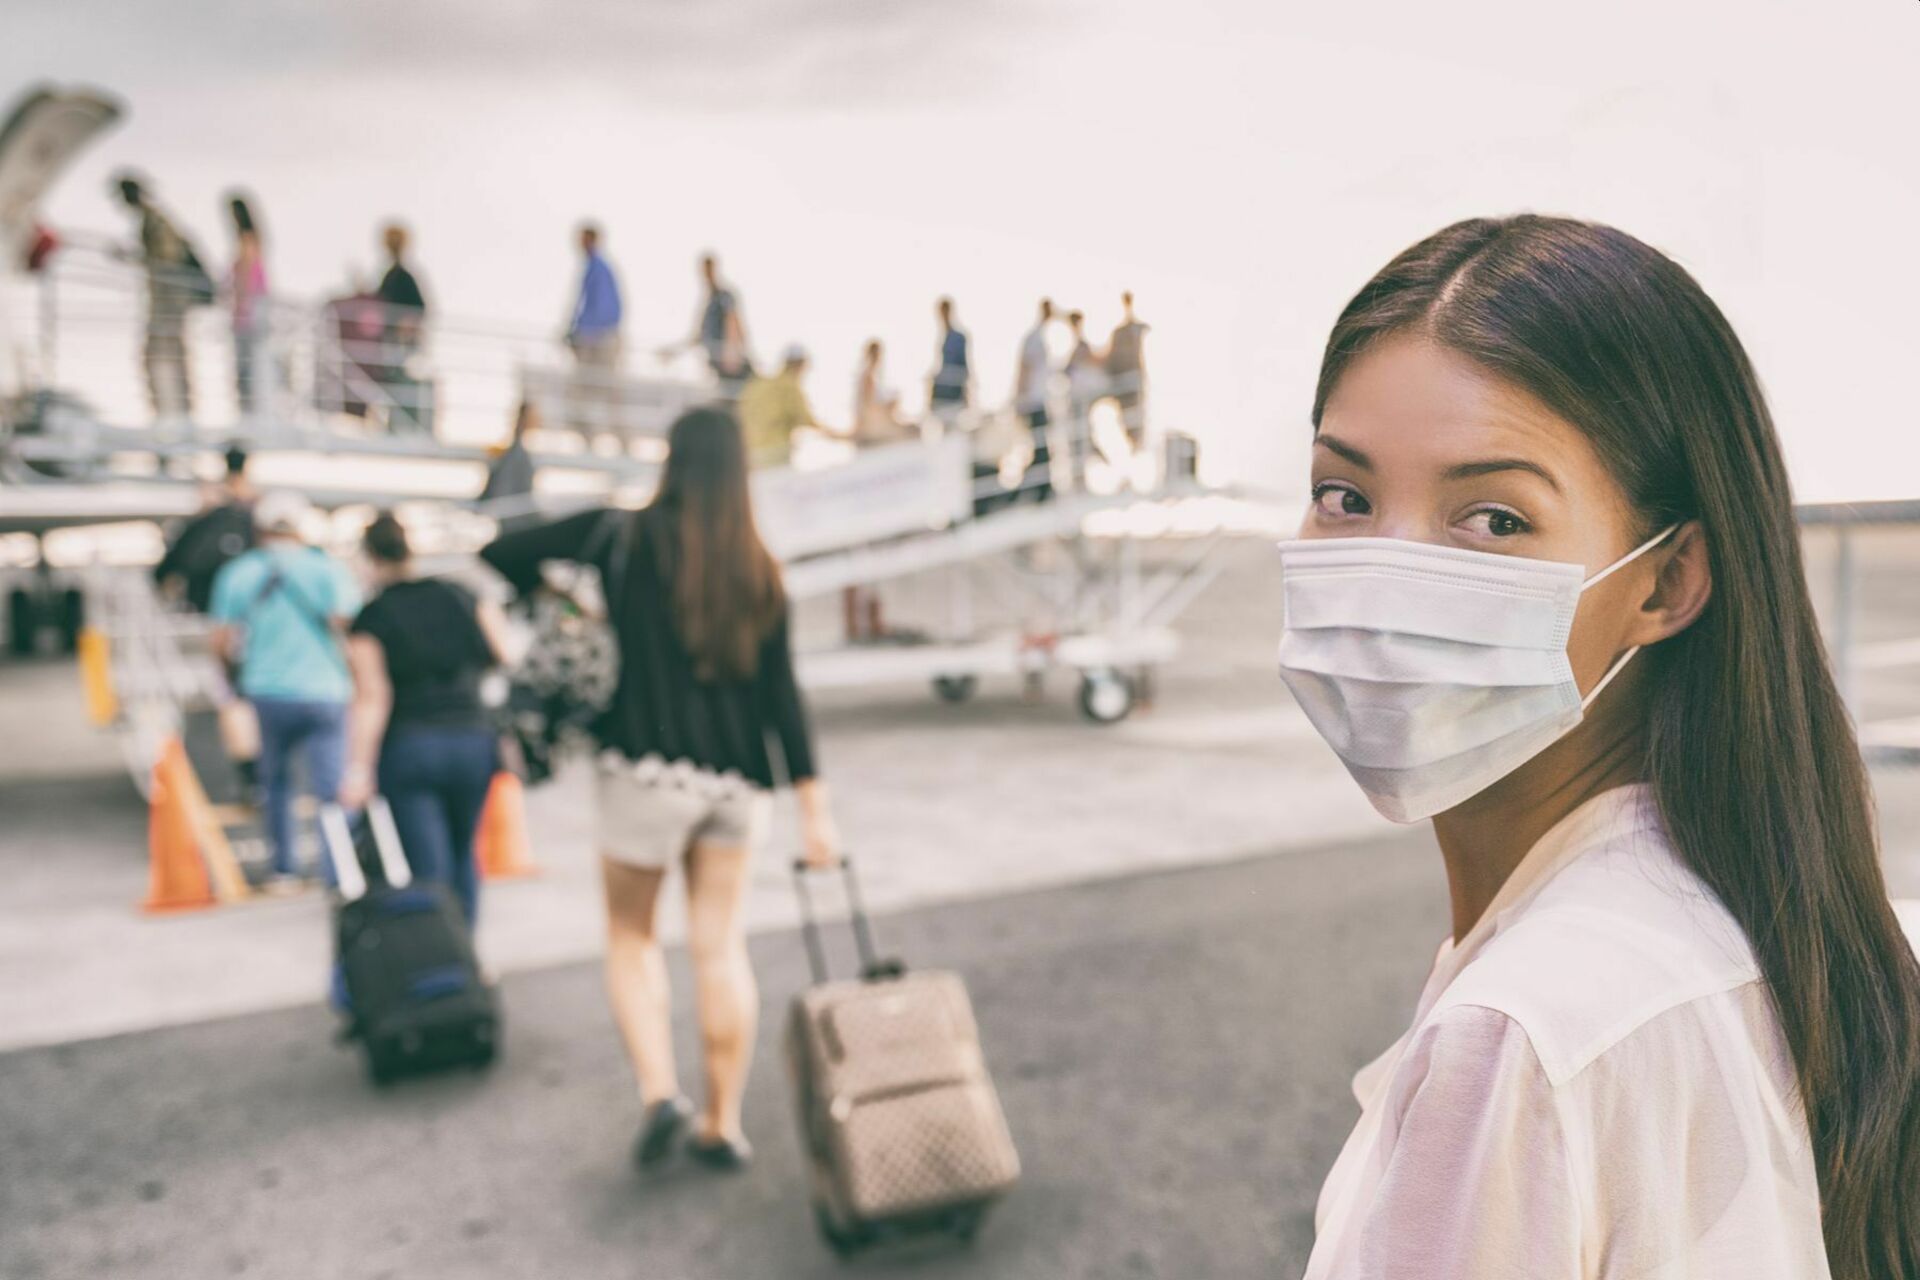 During pandemic. Пандемия ковид 19. Люди в масках в аэропорту. Туризм в пандемию. Девушка в аэропорту в маске.